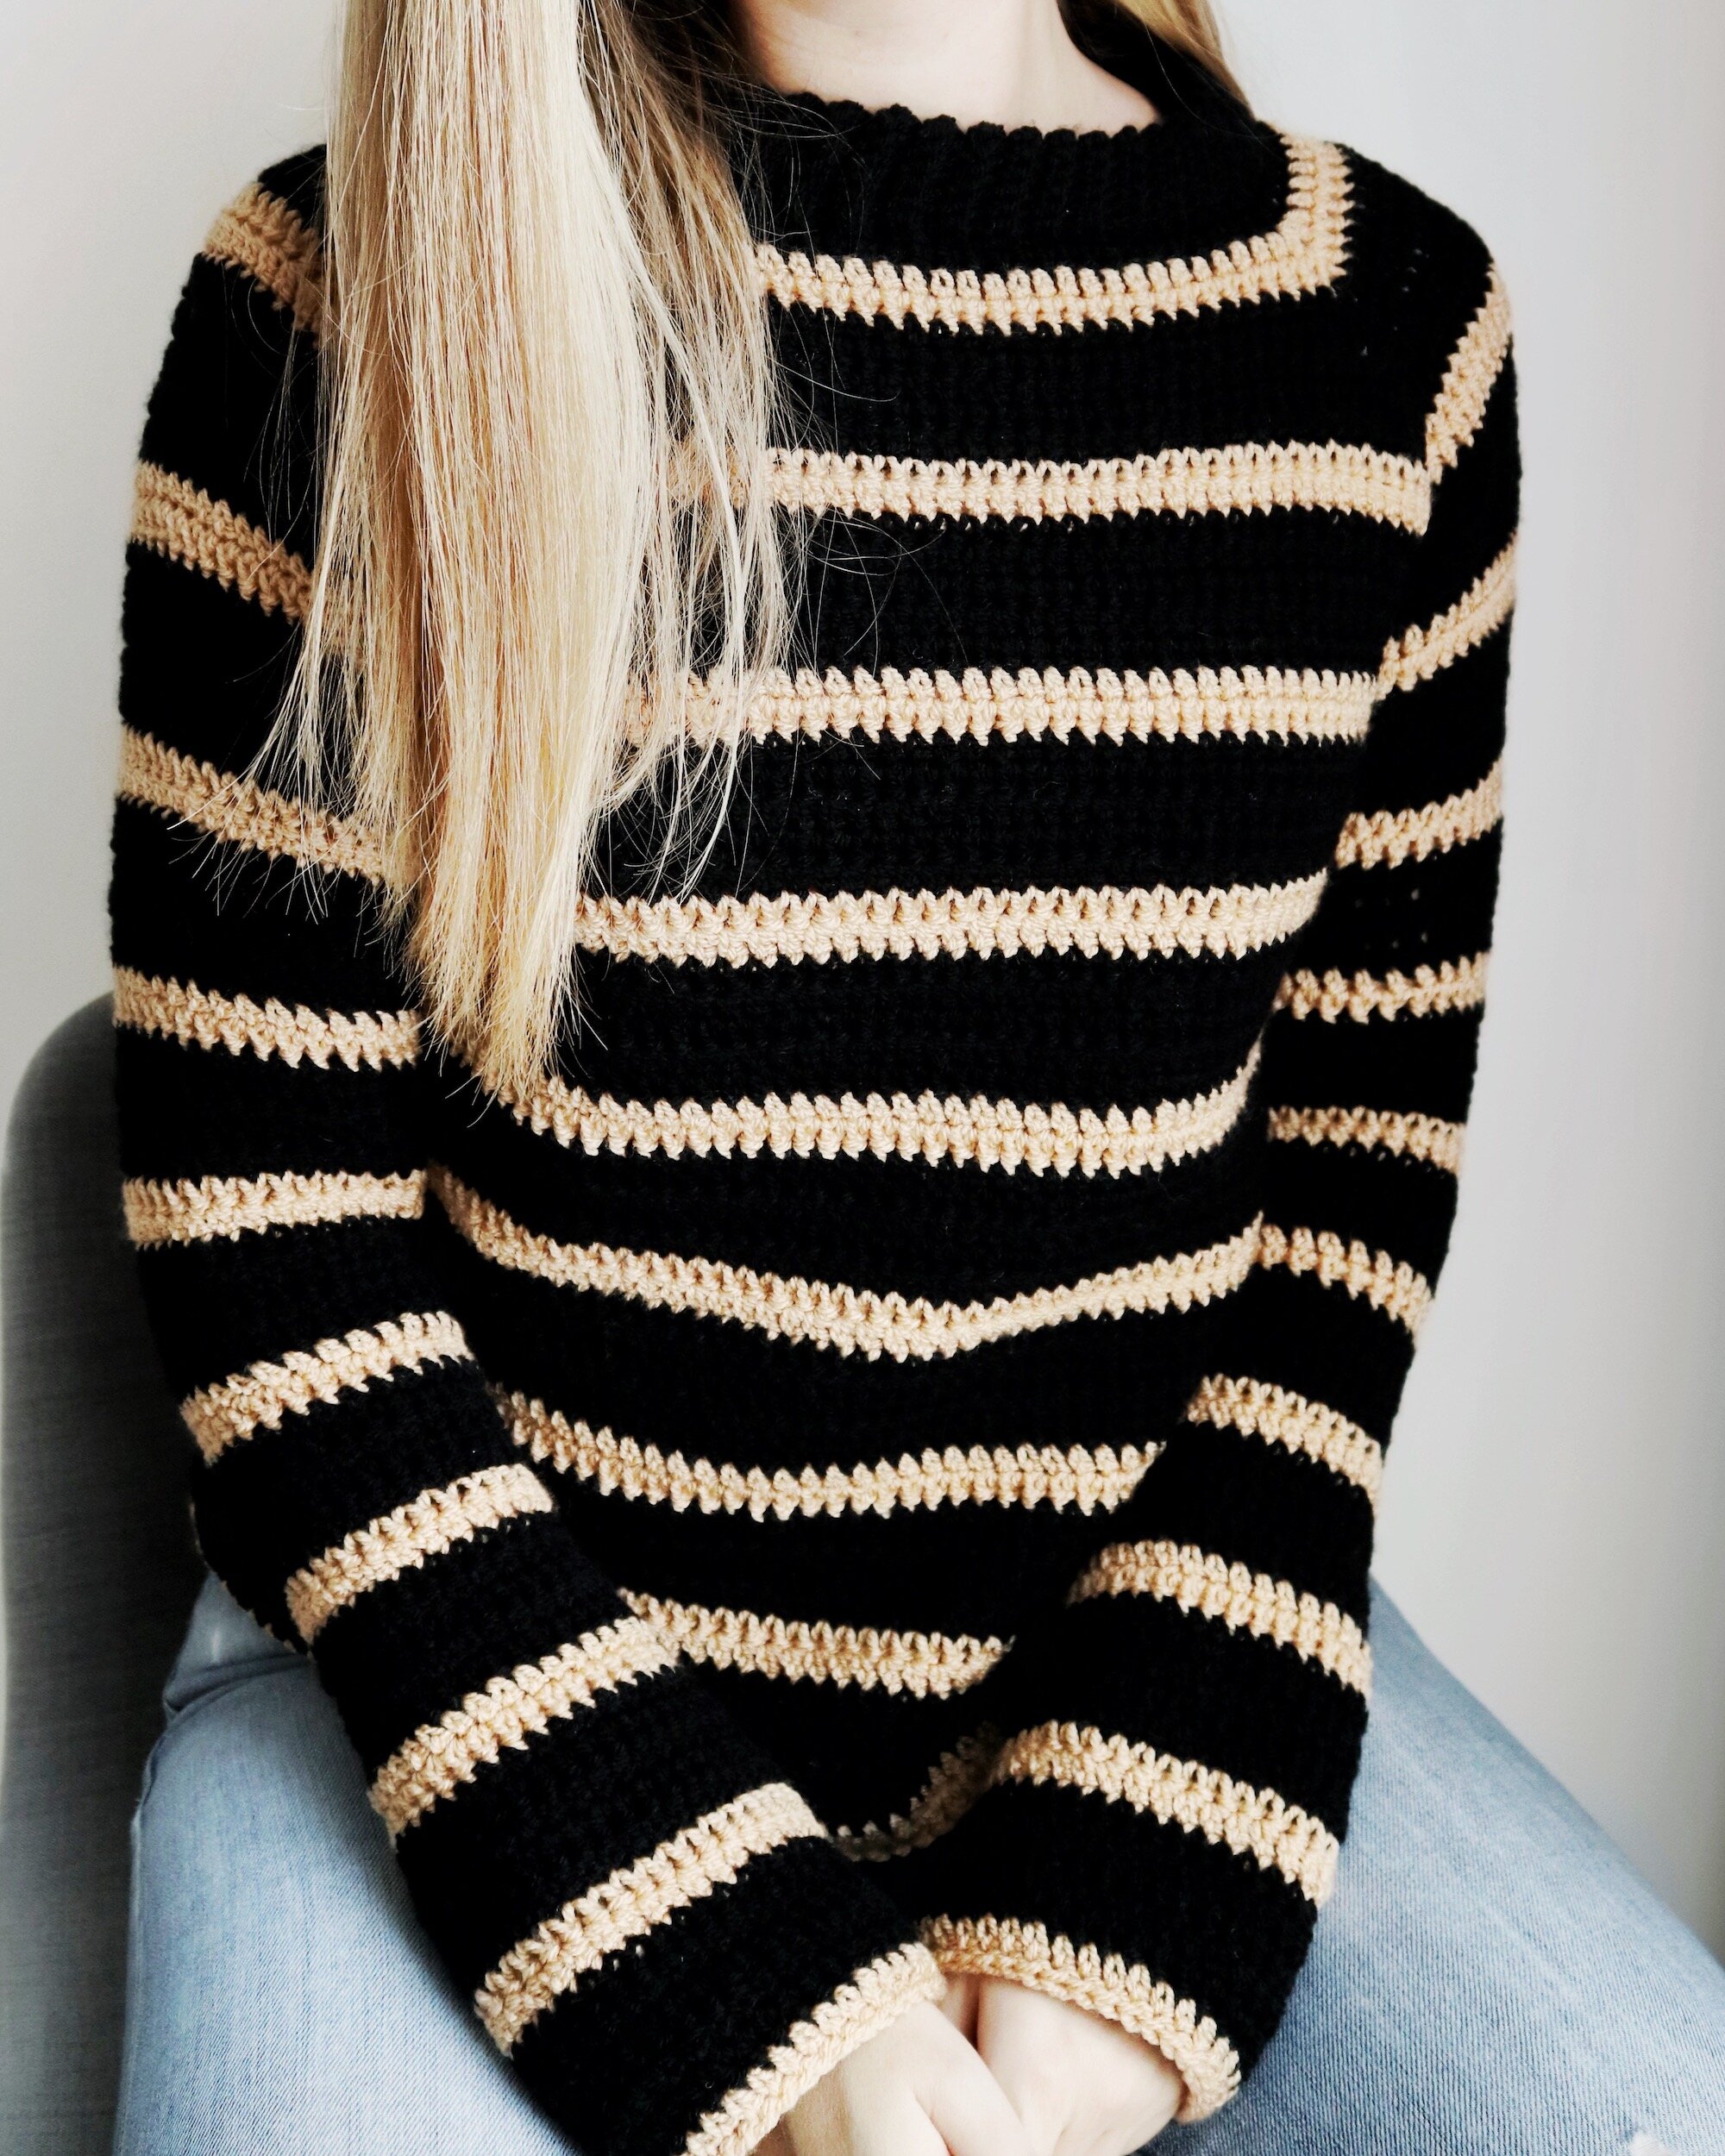 Striped Crochet Sweater - Monday Morning Sweater — Coffee & Crocheting